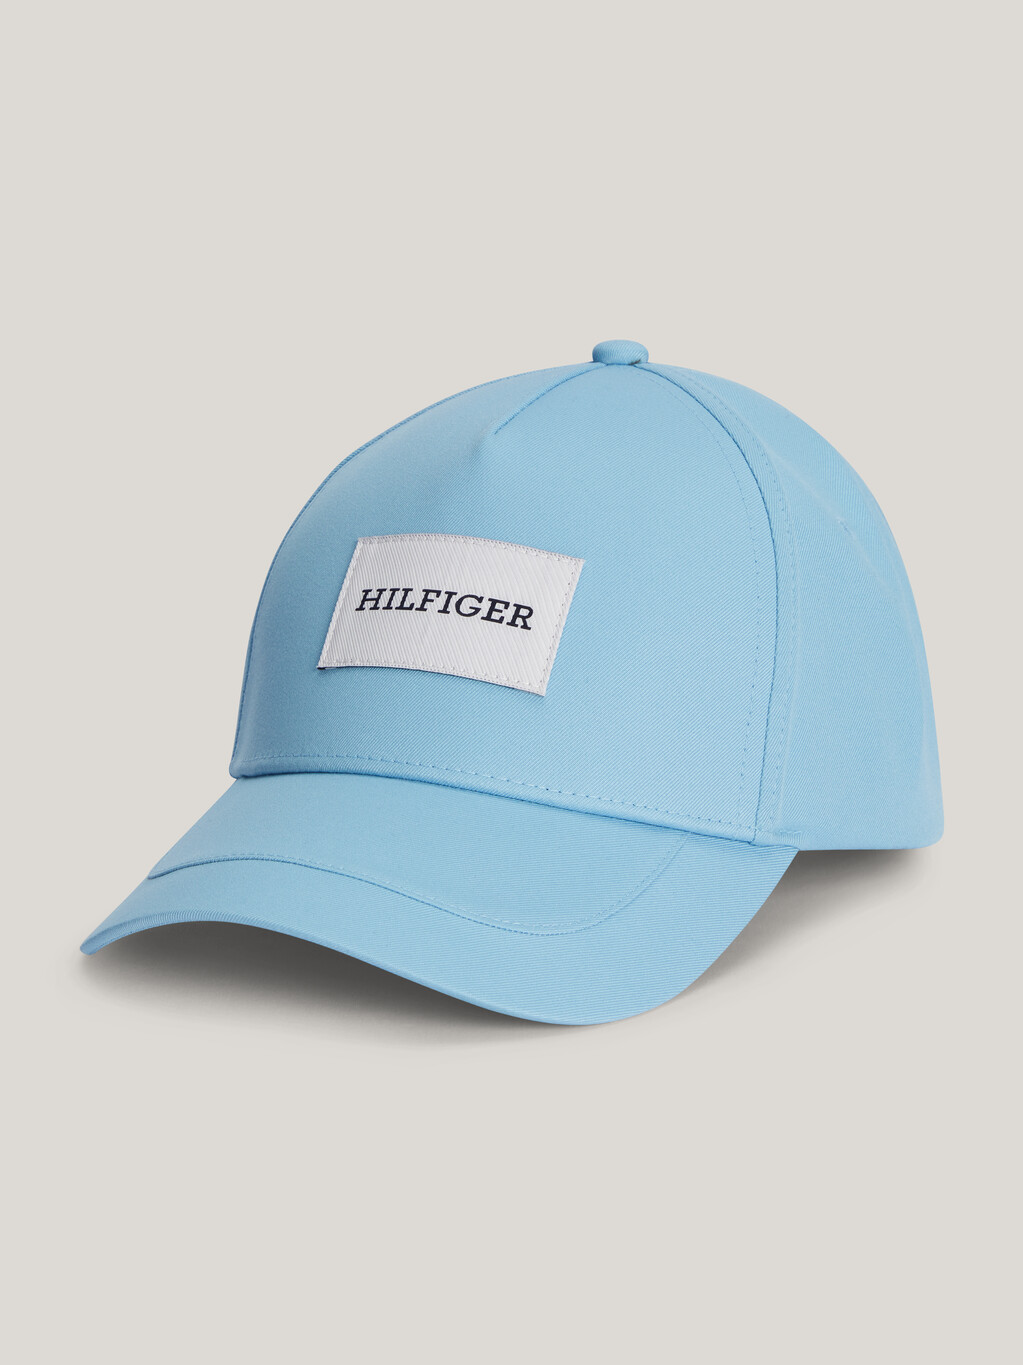 Hilfiger Monotype 五片式棒球帽, Sleepy Blue, hi-res